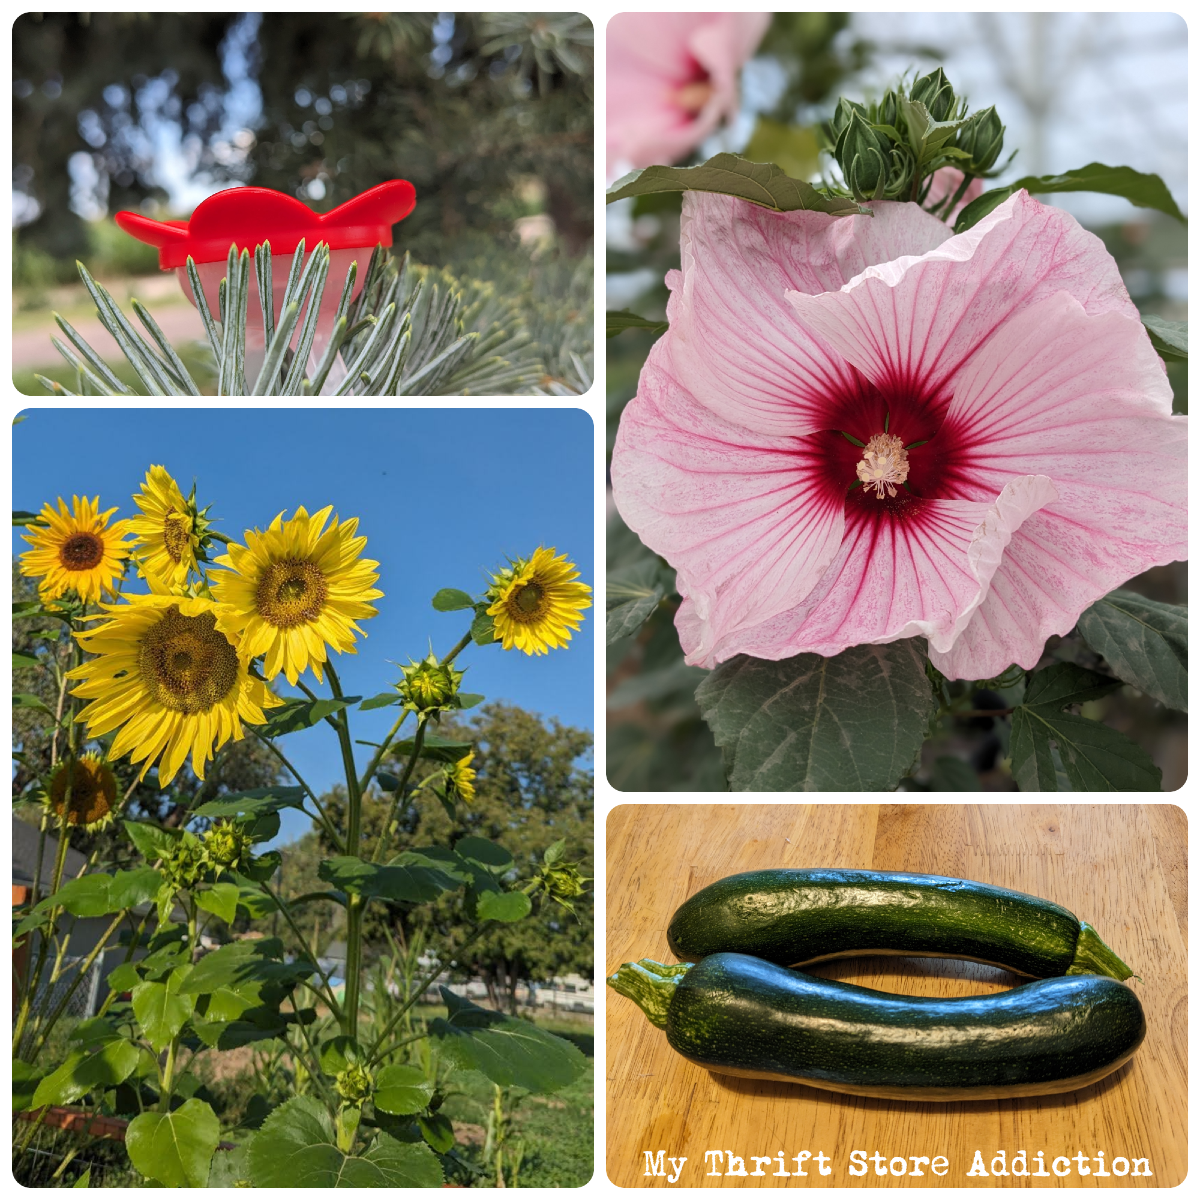 Colorado visit and CSU flower garden trial highlights